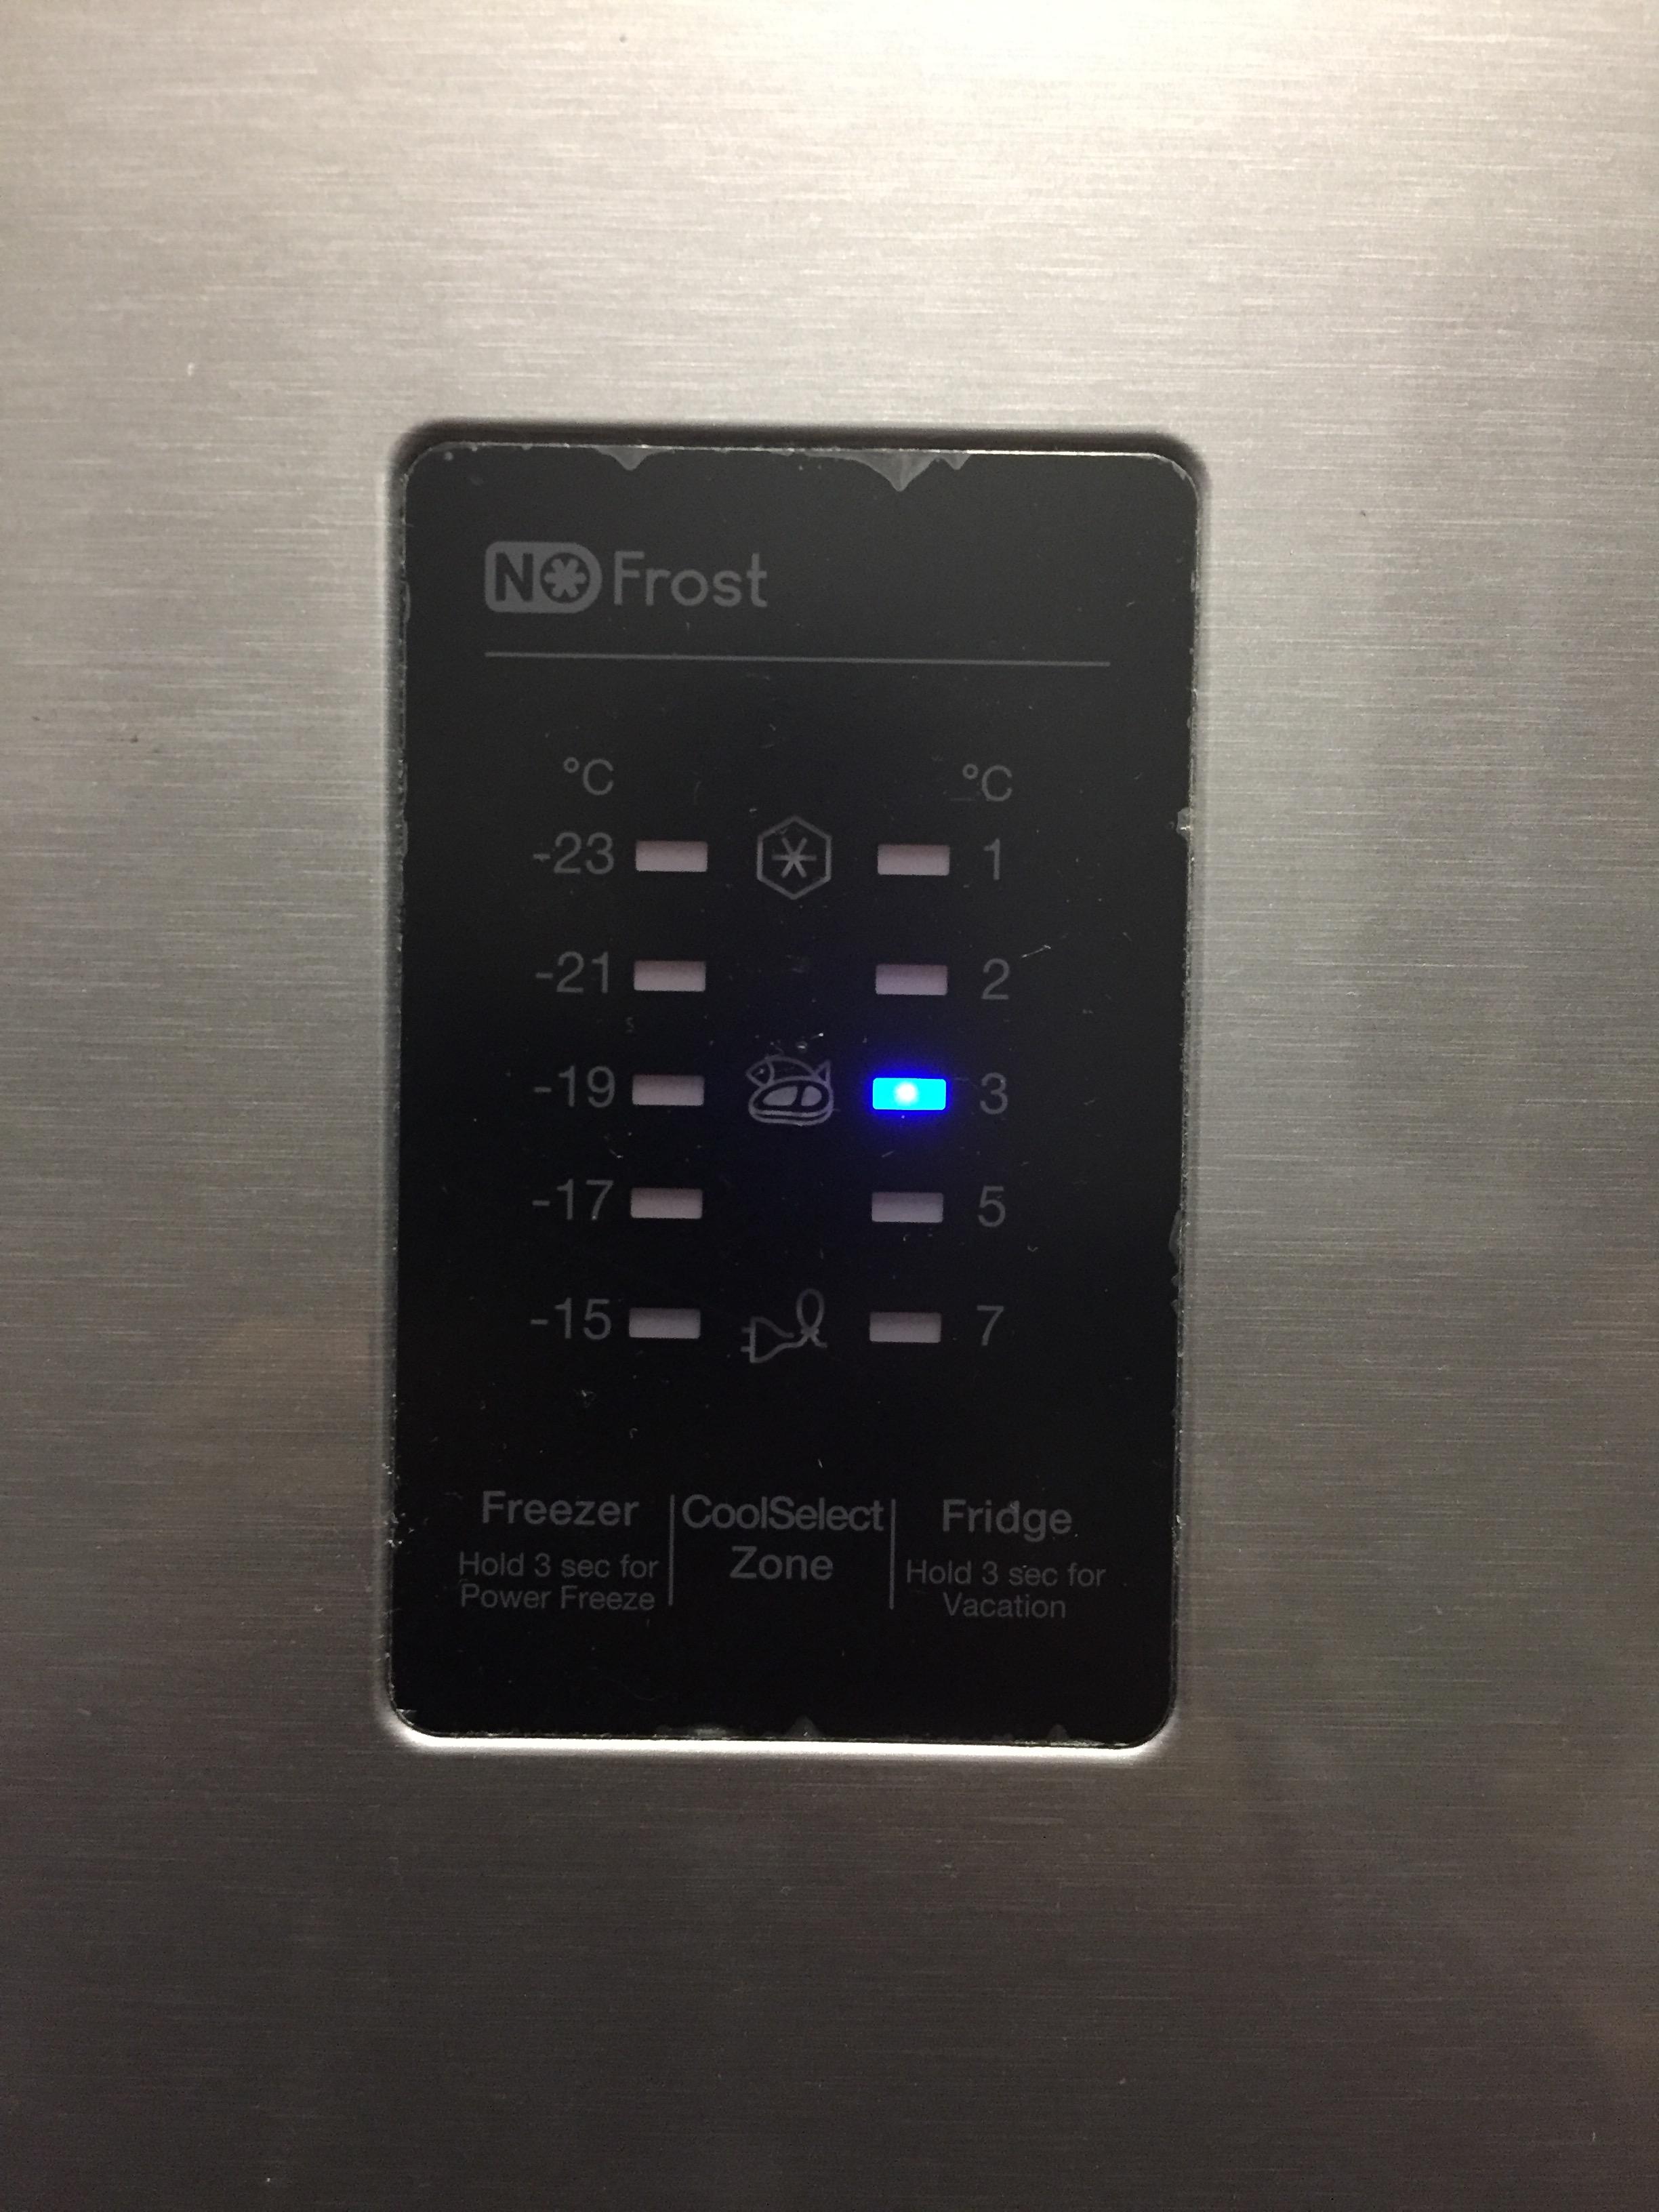 Problema frigorifero Samsung NoFrost - Samsung Community